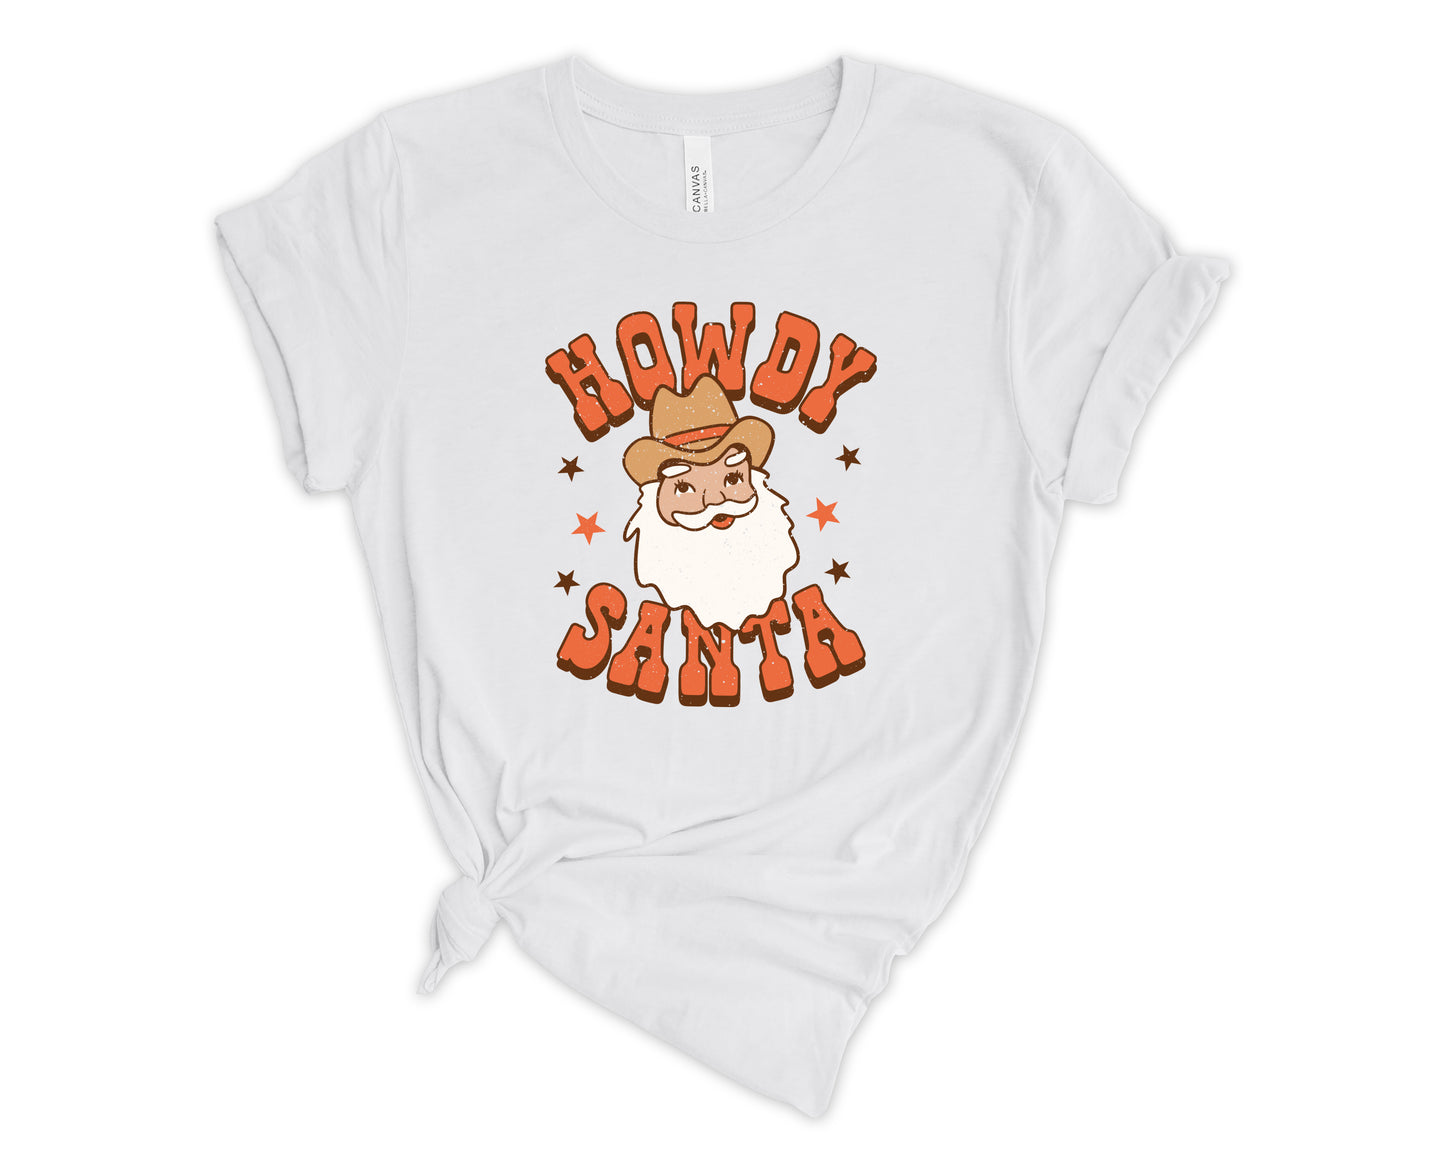 Howdy Santa Graphic T-Shirt